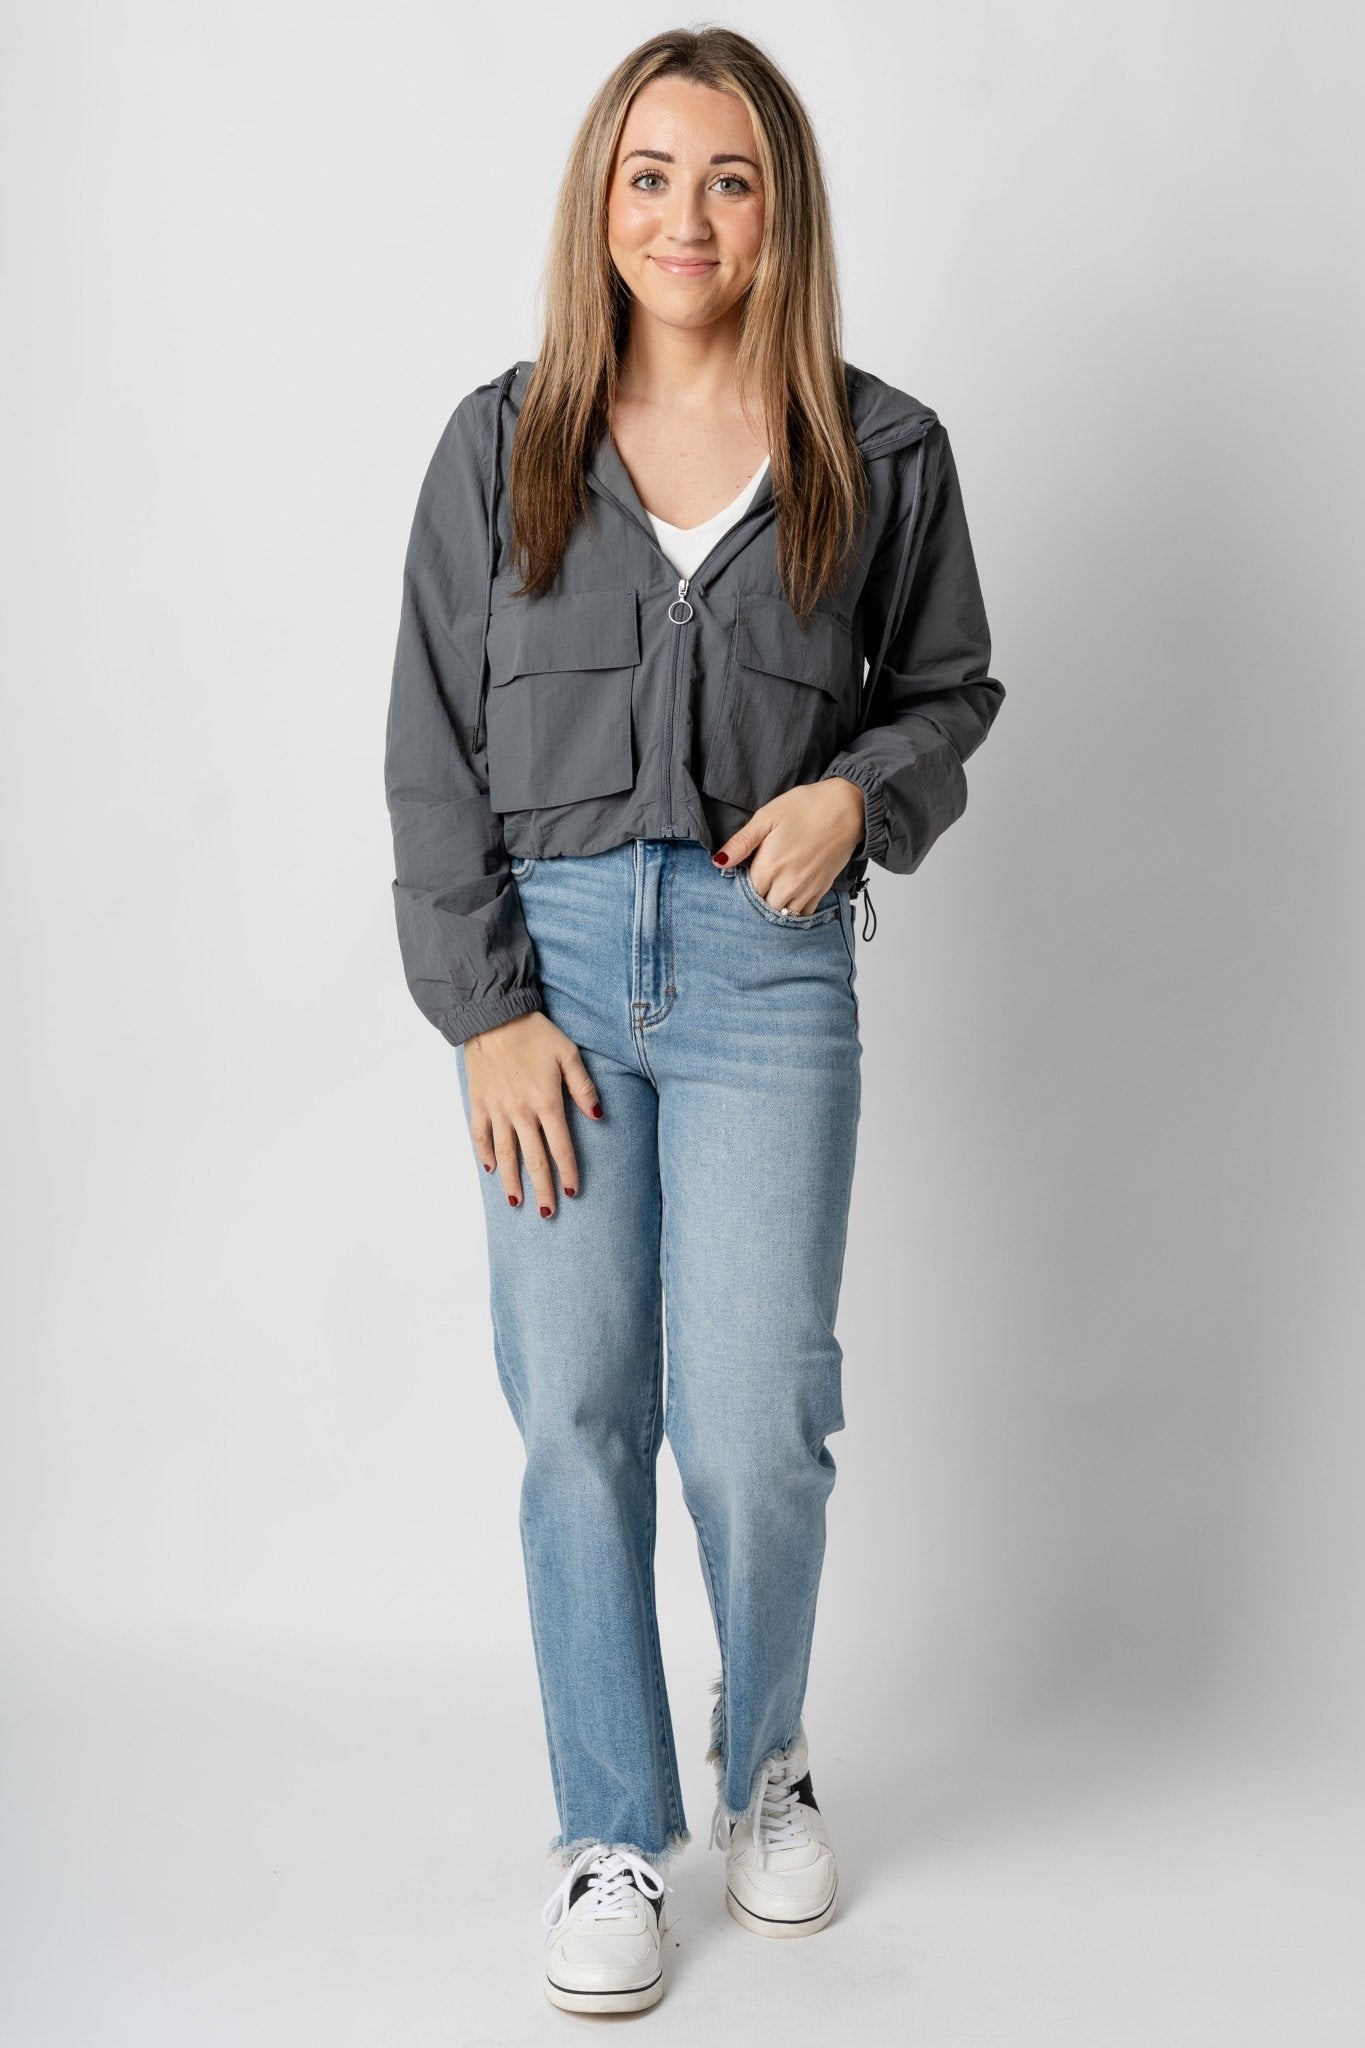 Lightweight nylon cargo jacket charcoal – Fashionable Jackets | Trendy Blazers at Lush Fashion Lounge Boutique in Oklahoma City